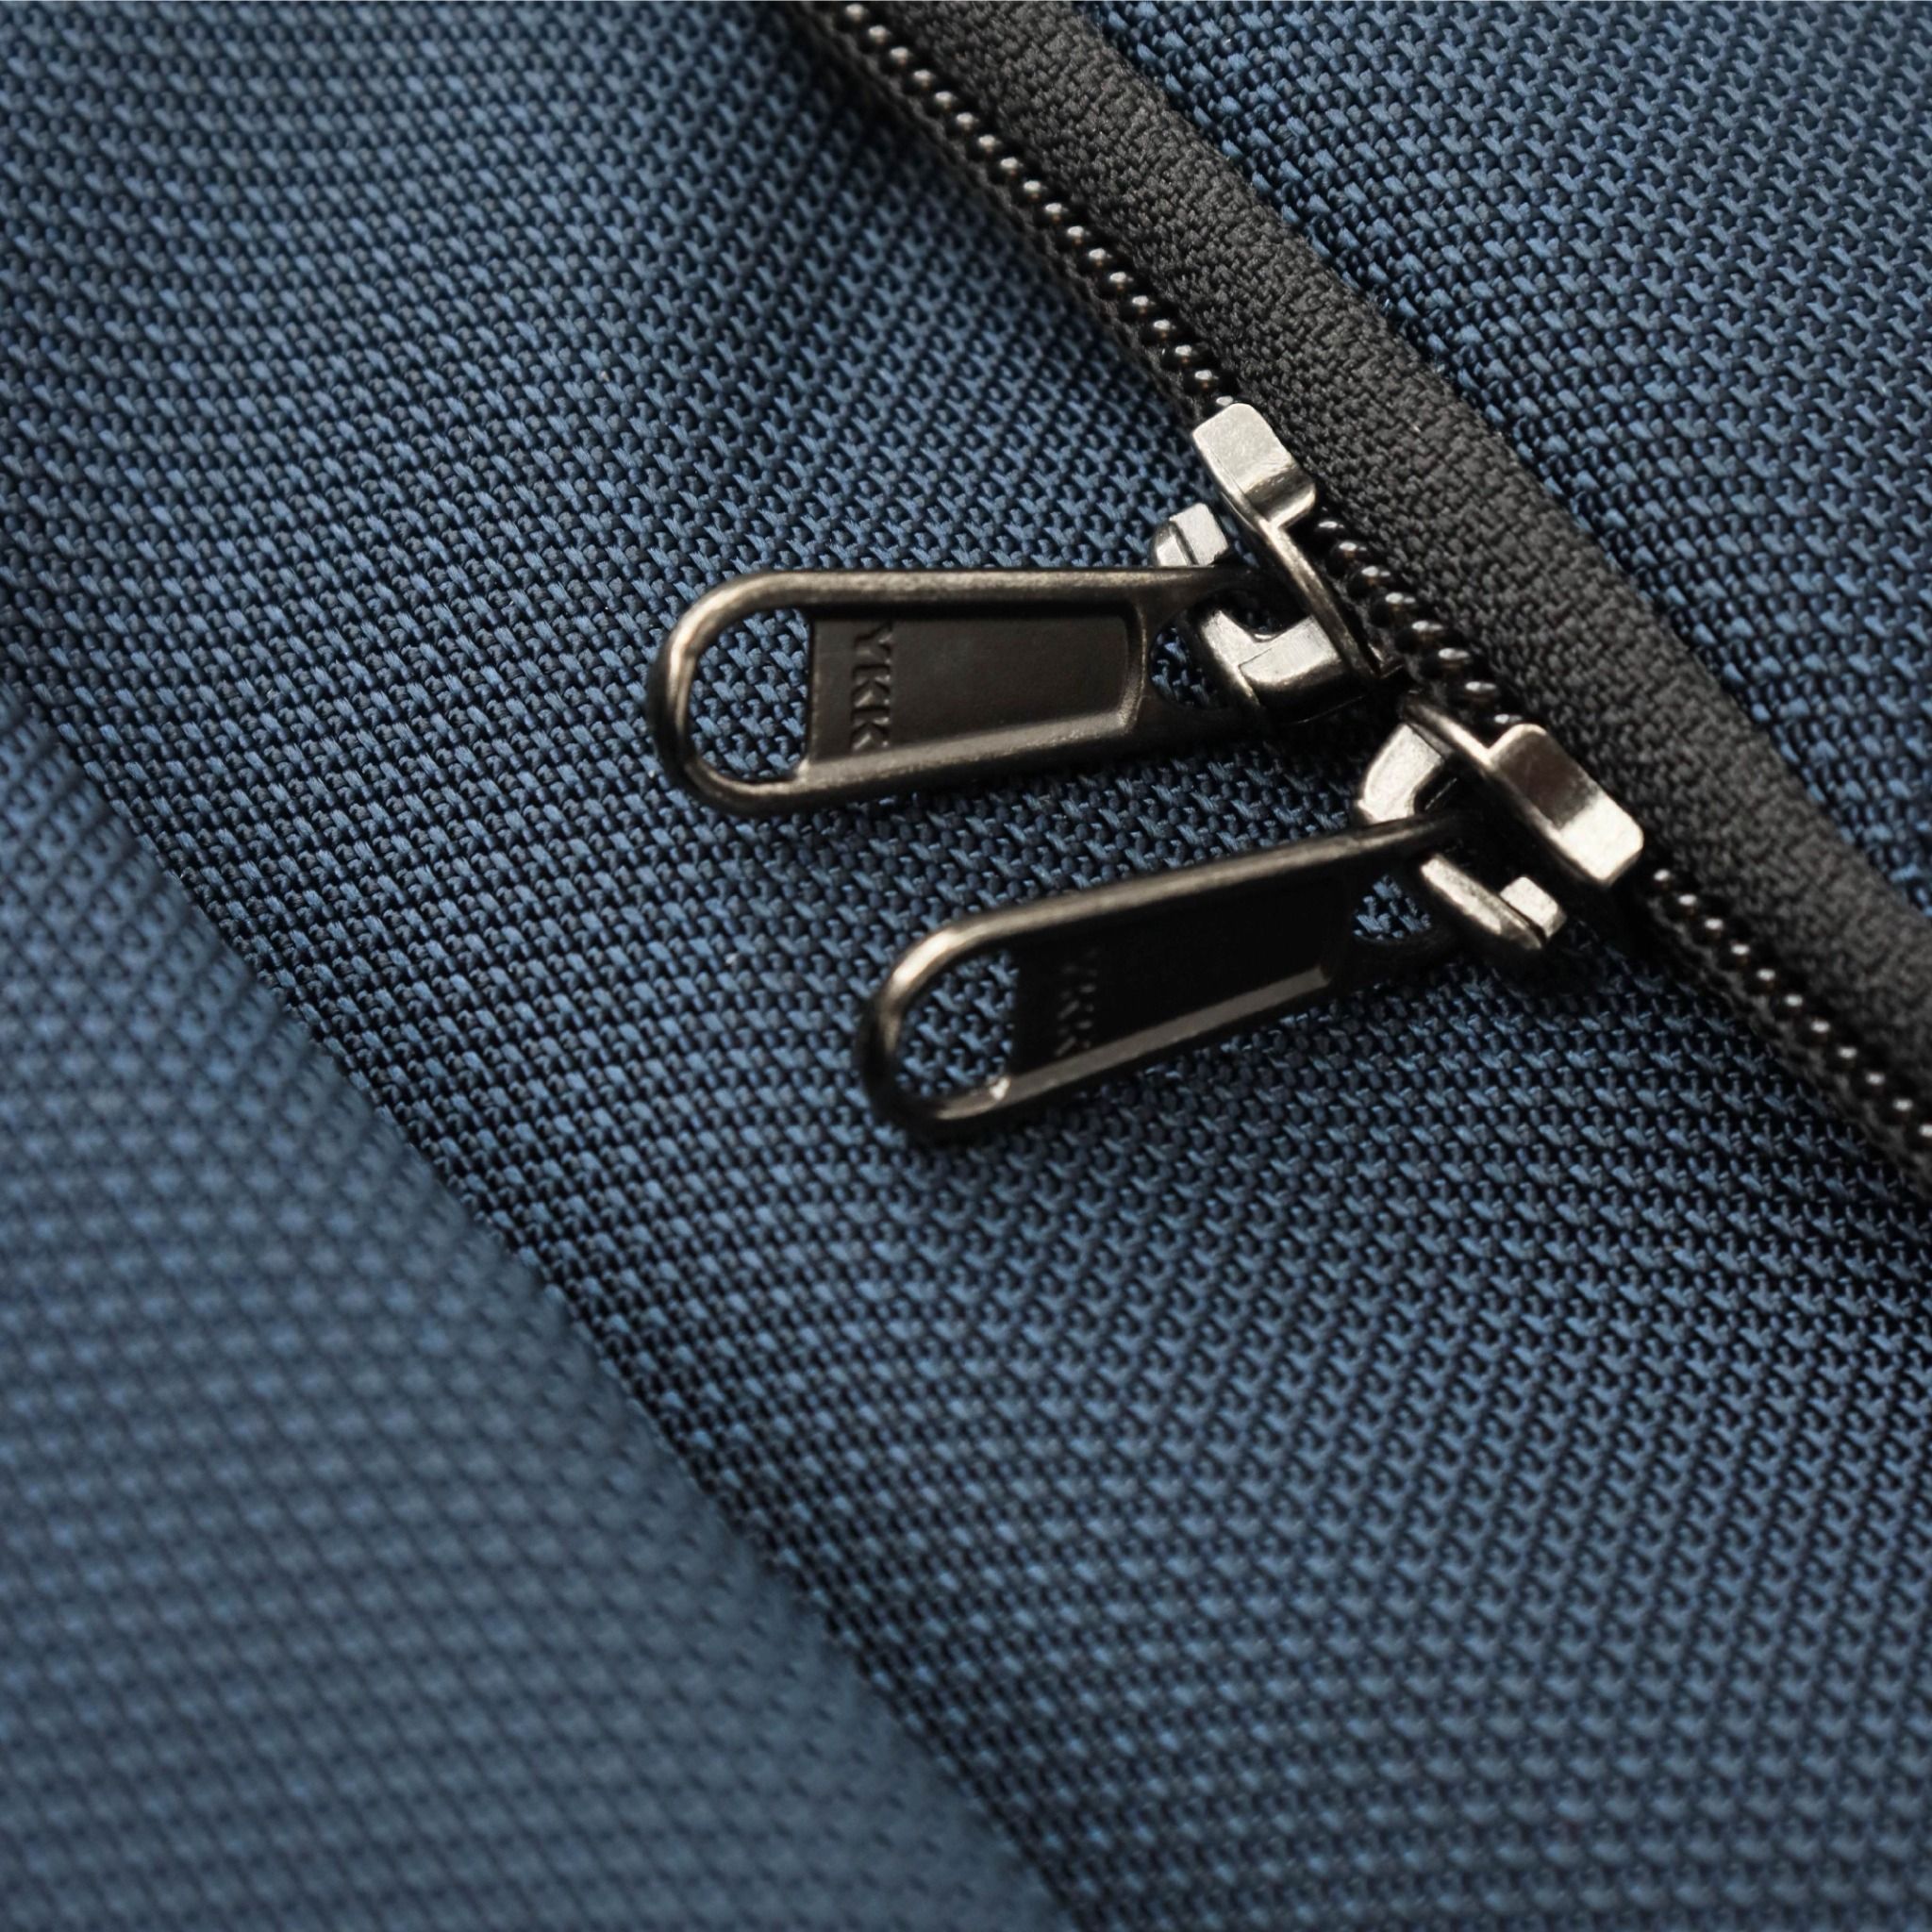  Urban Fabric Backpack - Charcoal Blue 